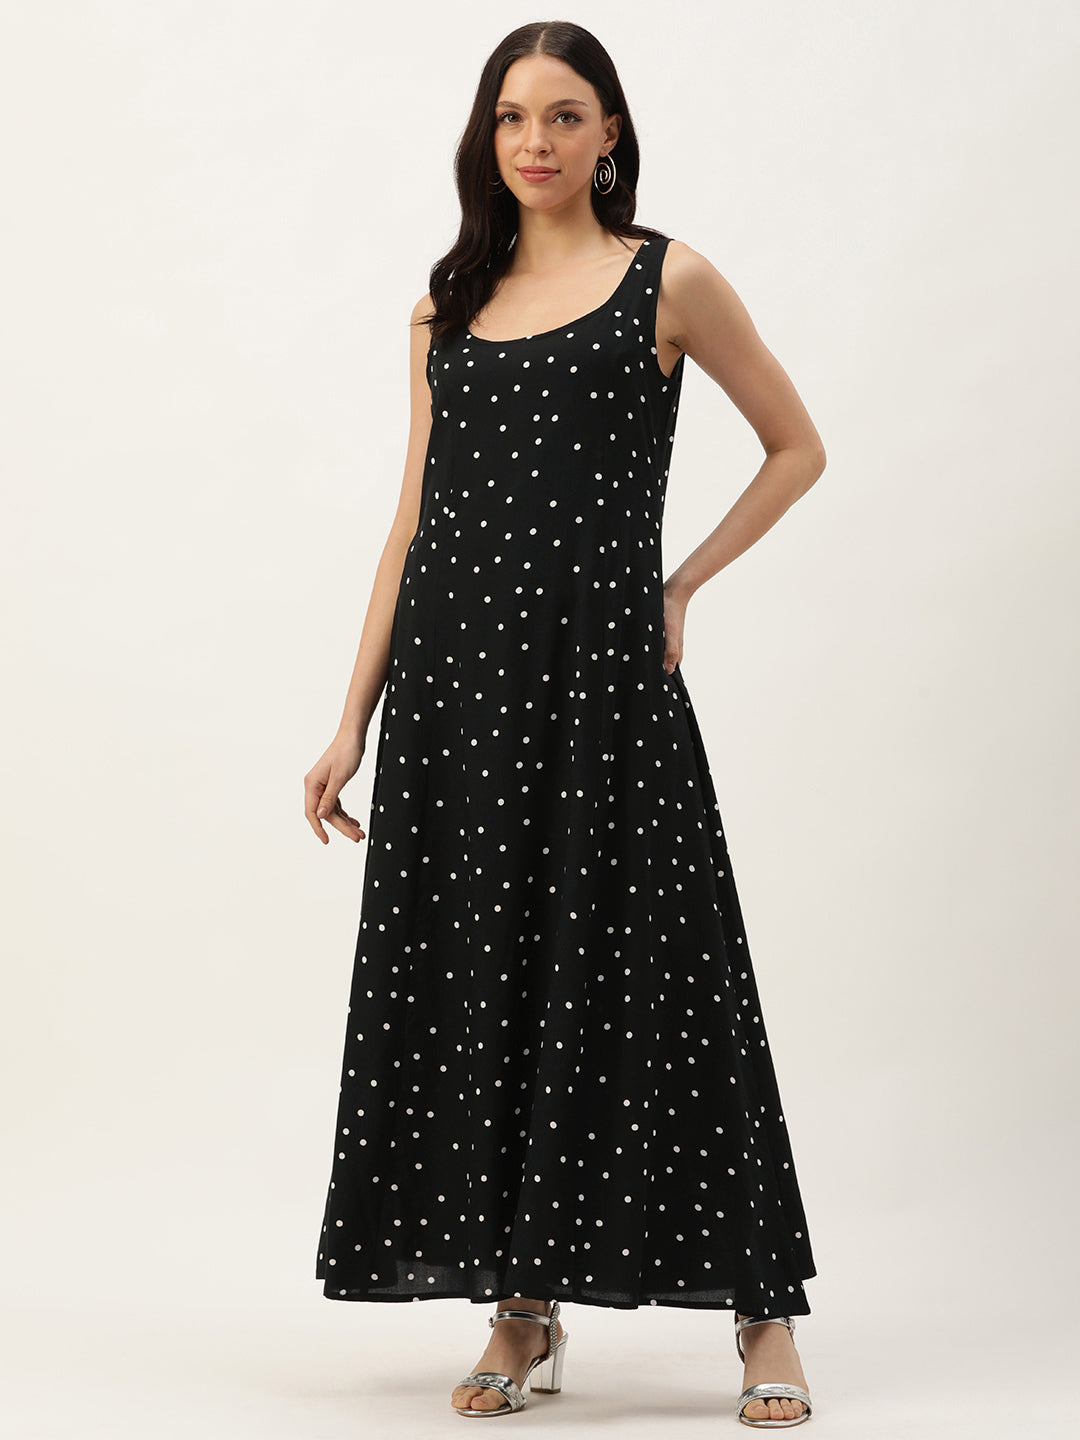 Black & White Polka Dots Printed Maxi Dress with a pocket